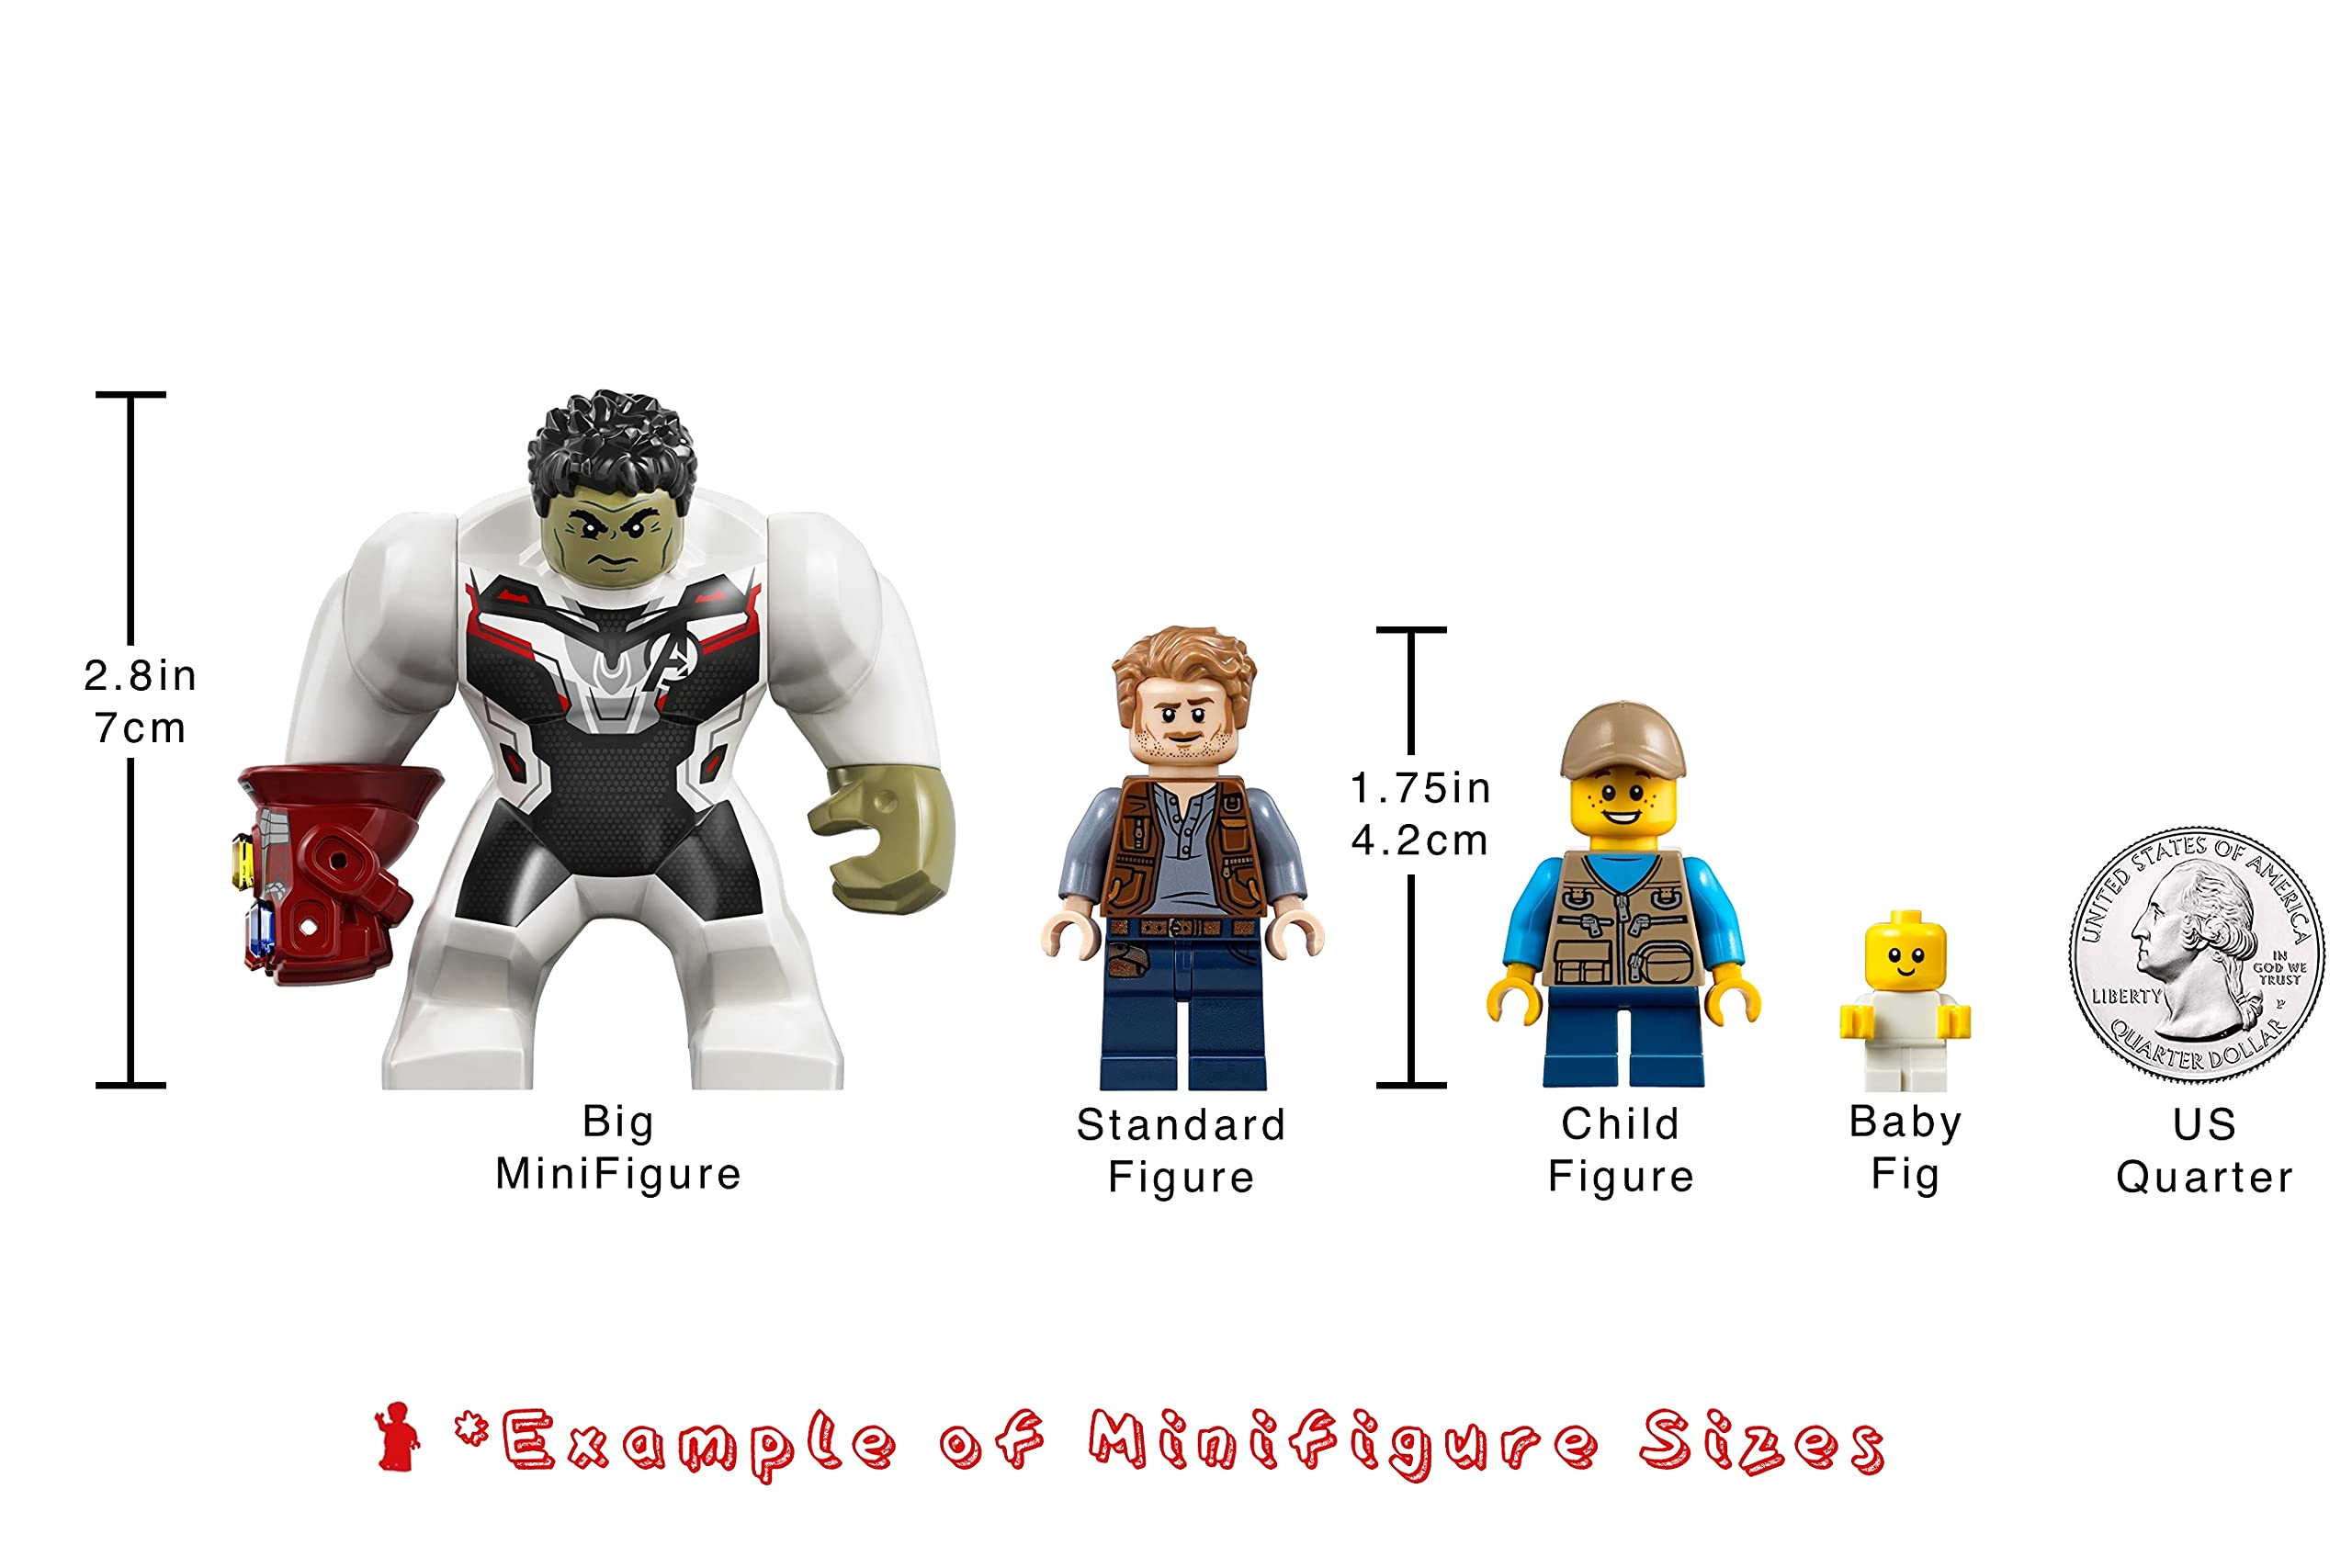 LEGO Friends Girl Female Male Minifigures - Lot of 6 Random Figures (No Duplicates)